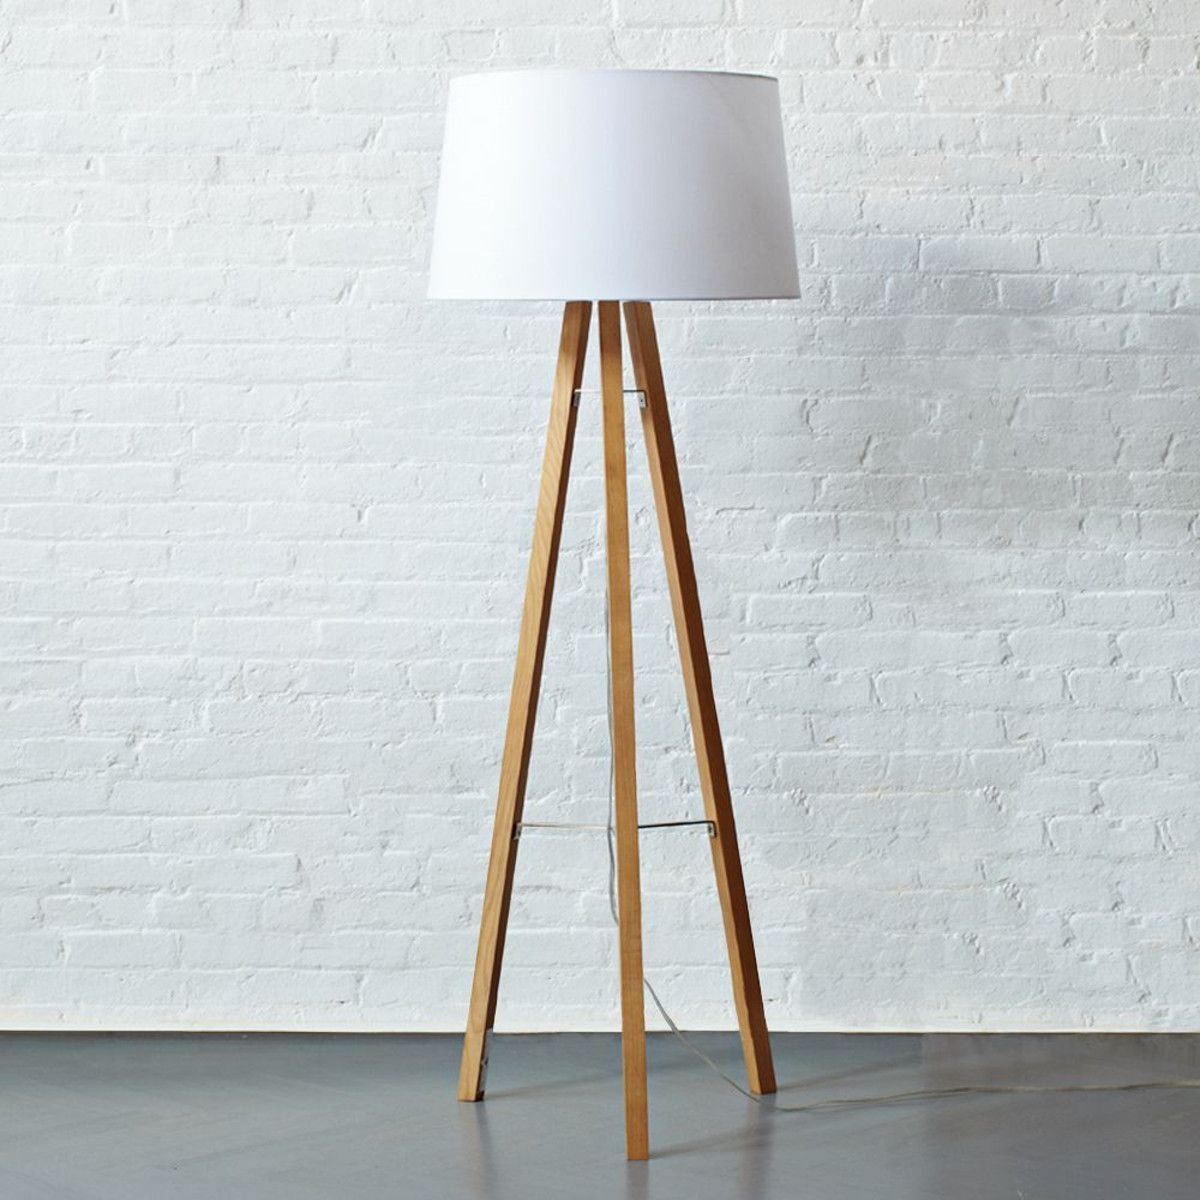 Tripod Wood Floor Lamp This That Wood Floor Lamp Diy within dimensions 1200 X 1200